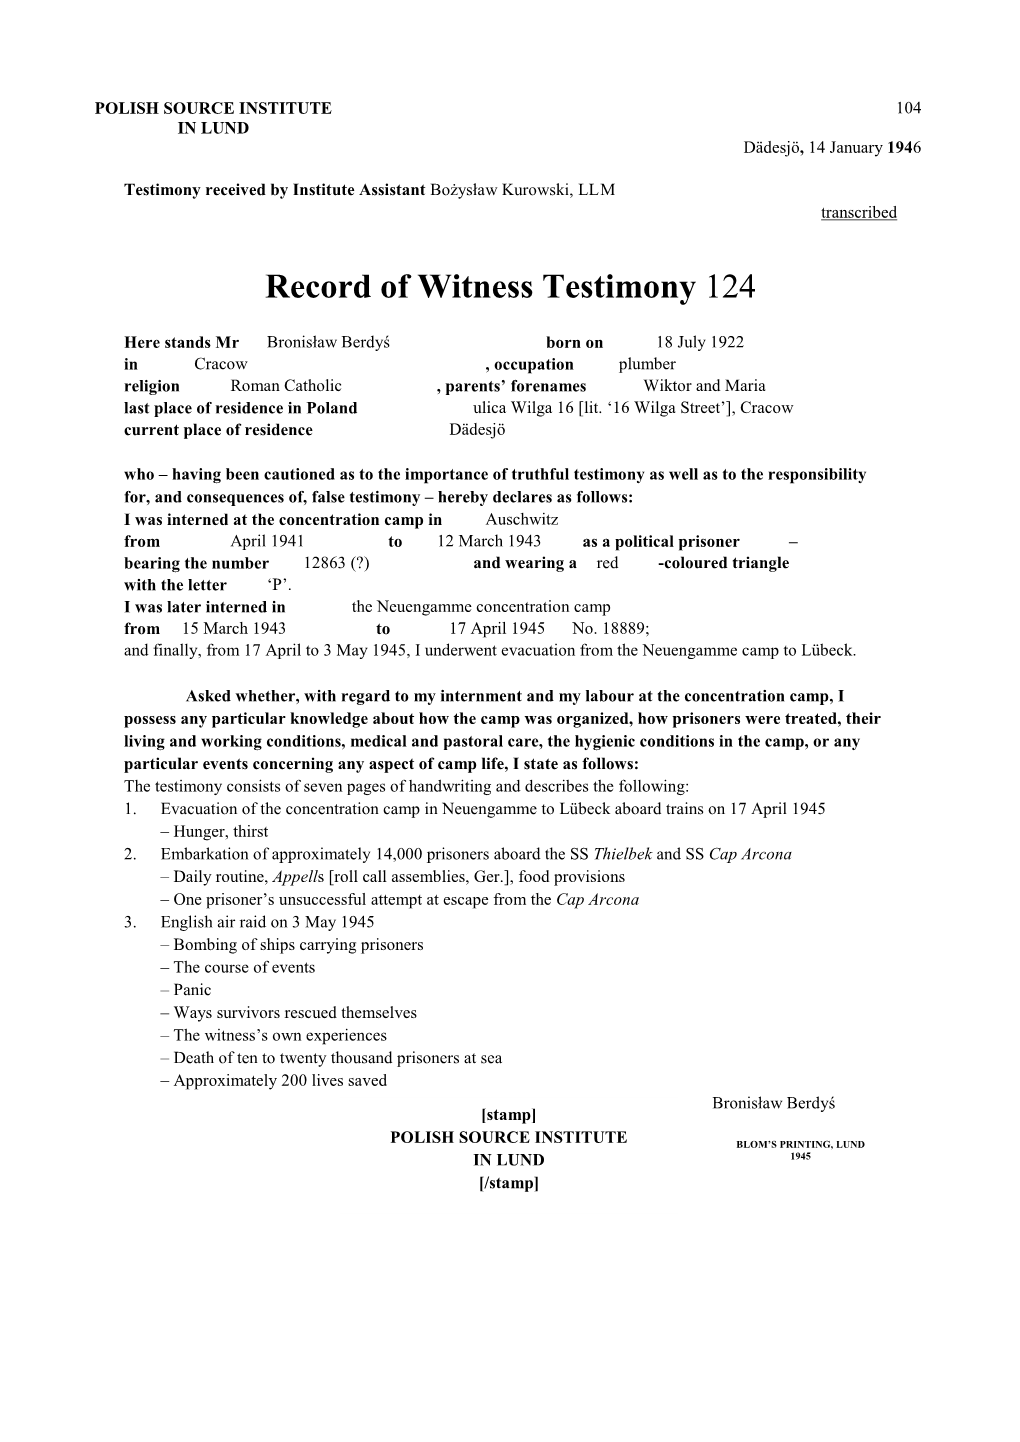 Record of Witness Testimony 124